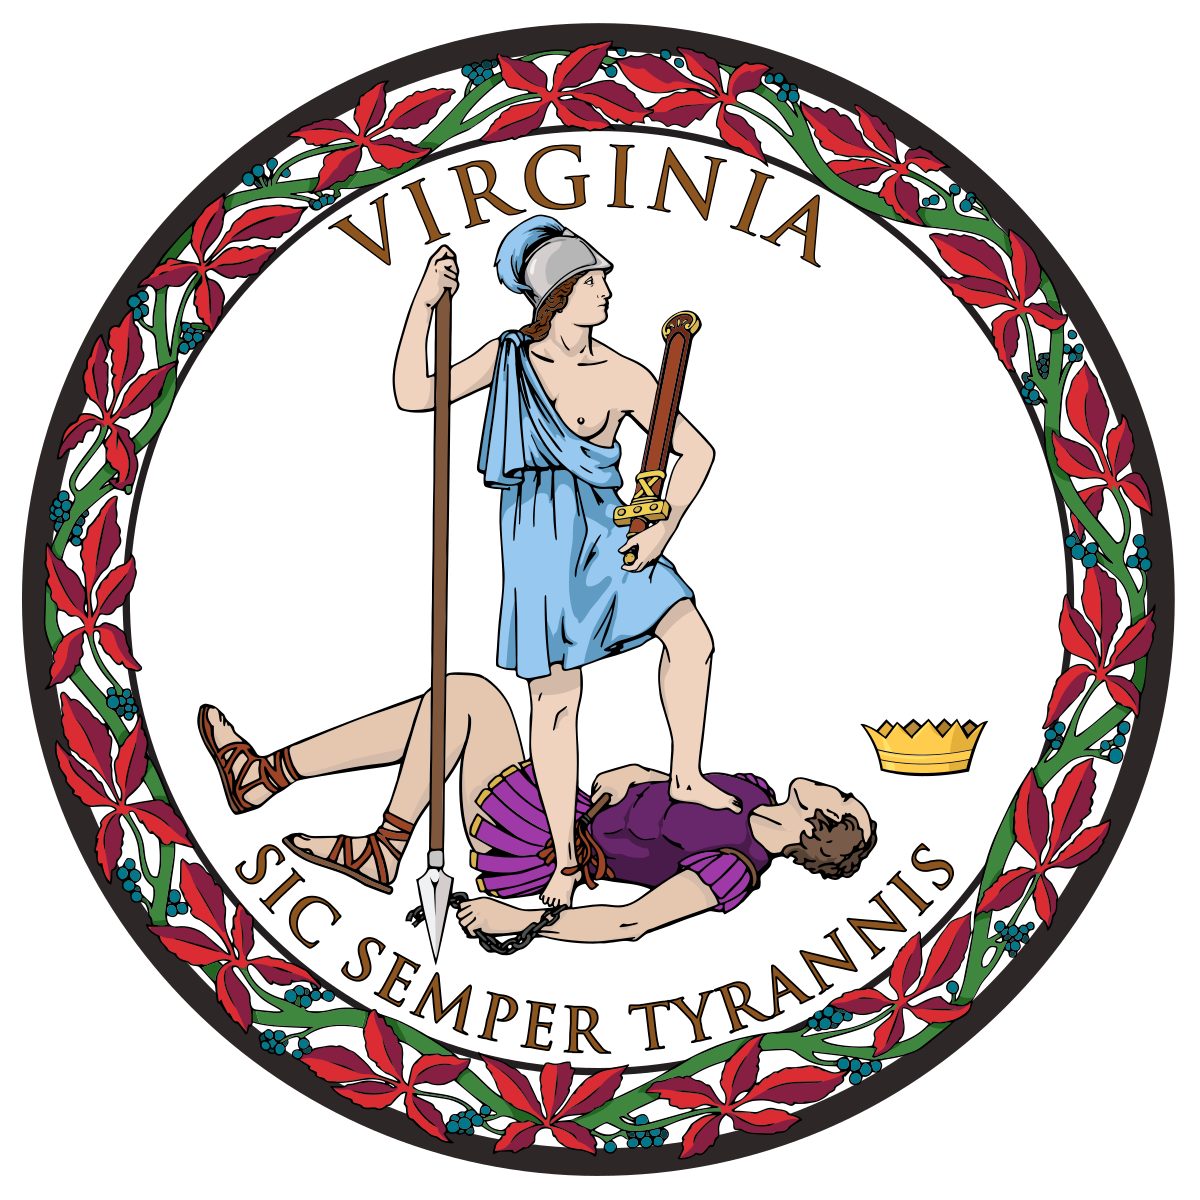 Virginia Secretary of State website